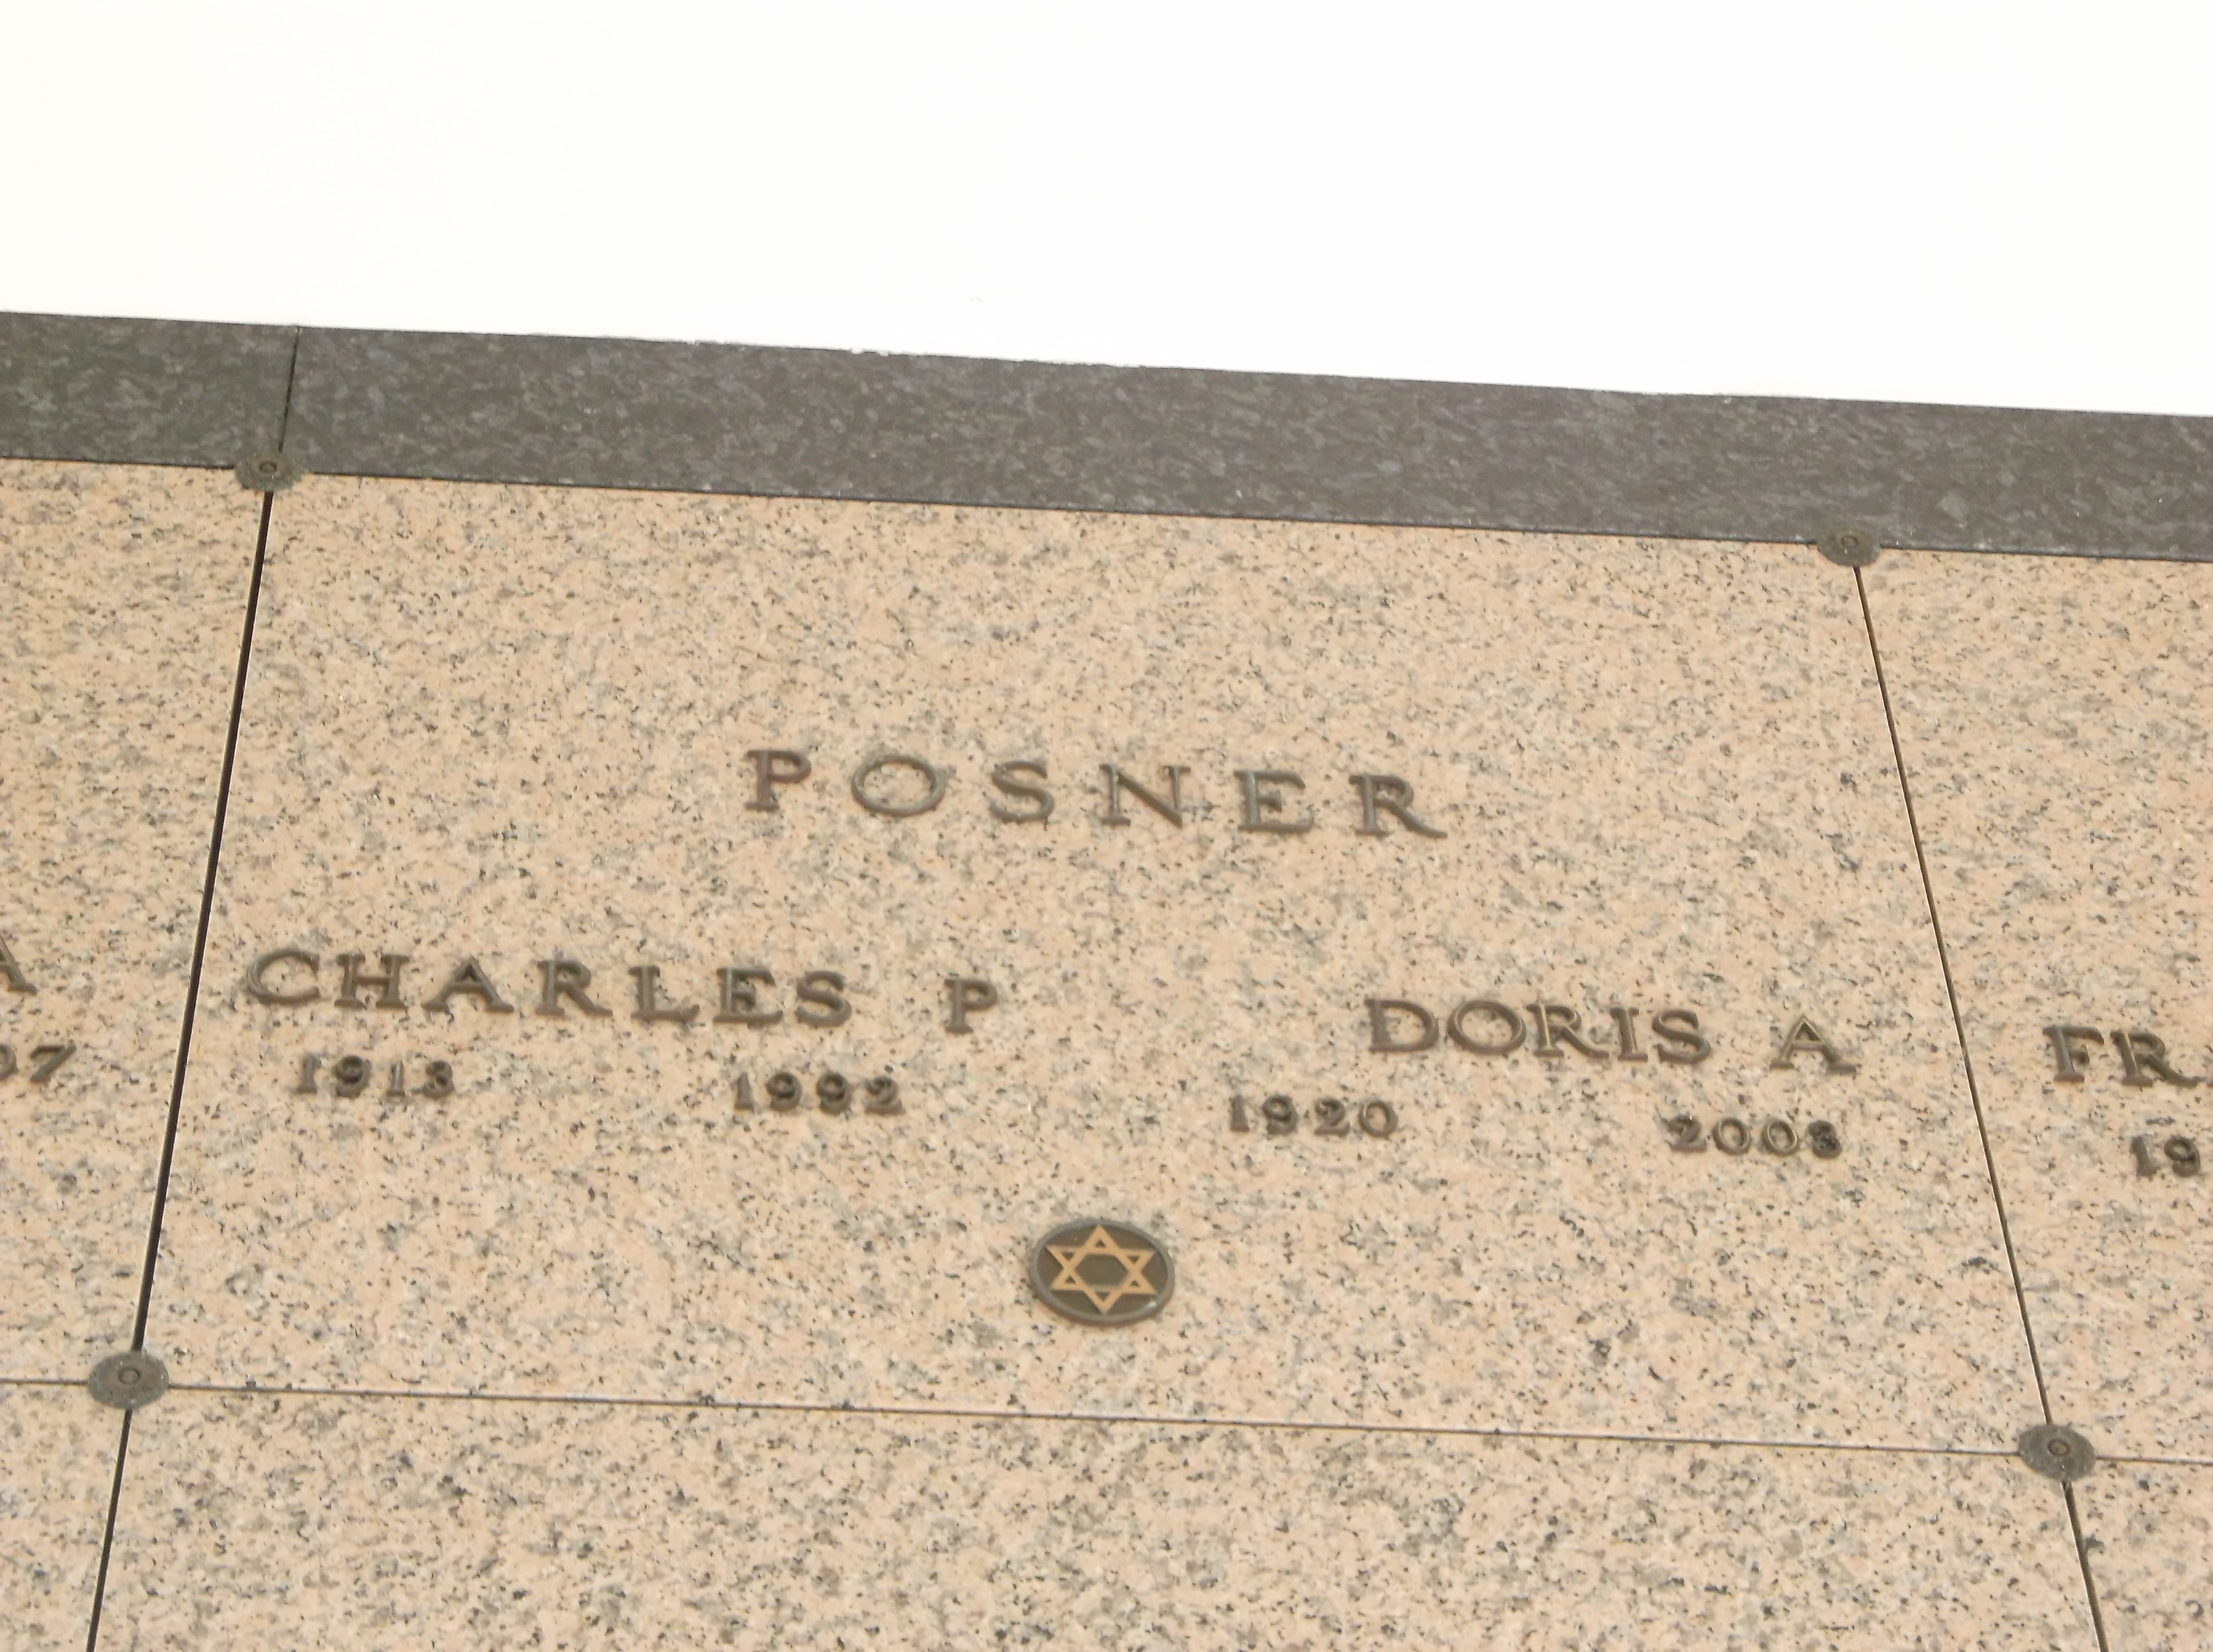 Charles P Posner